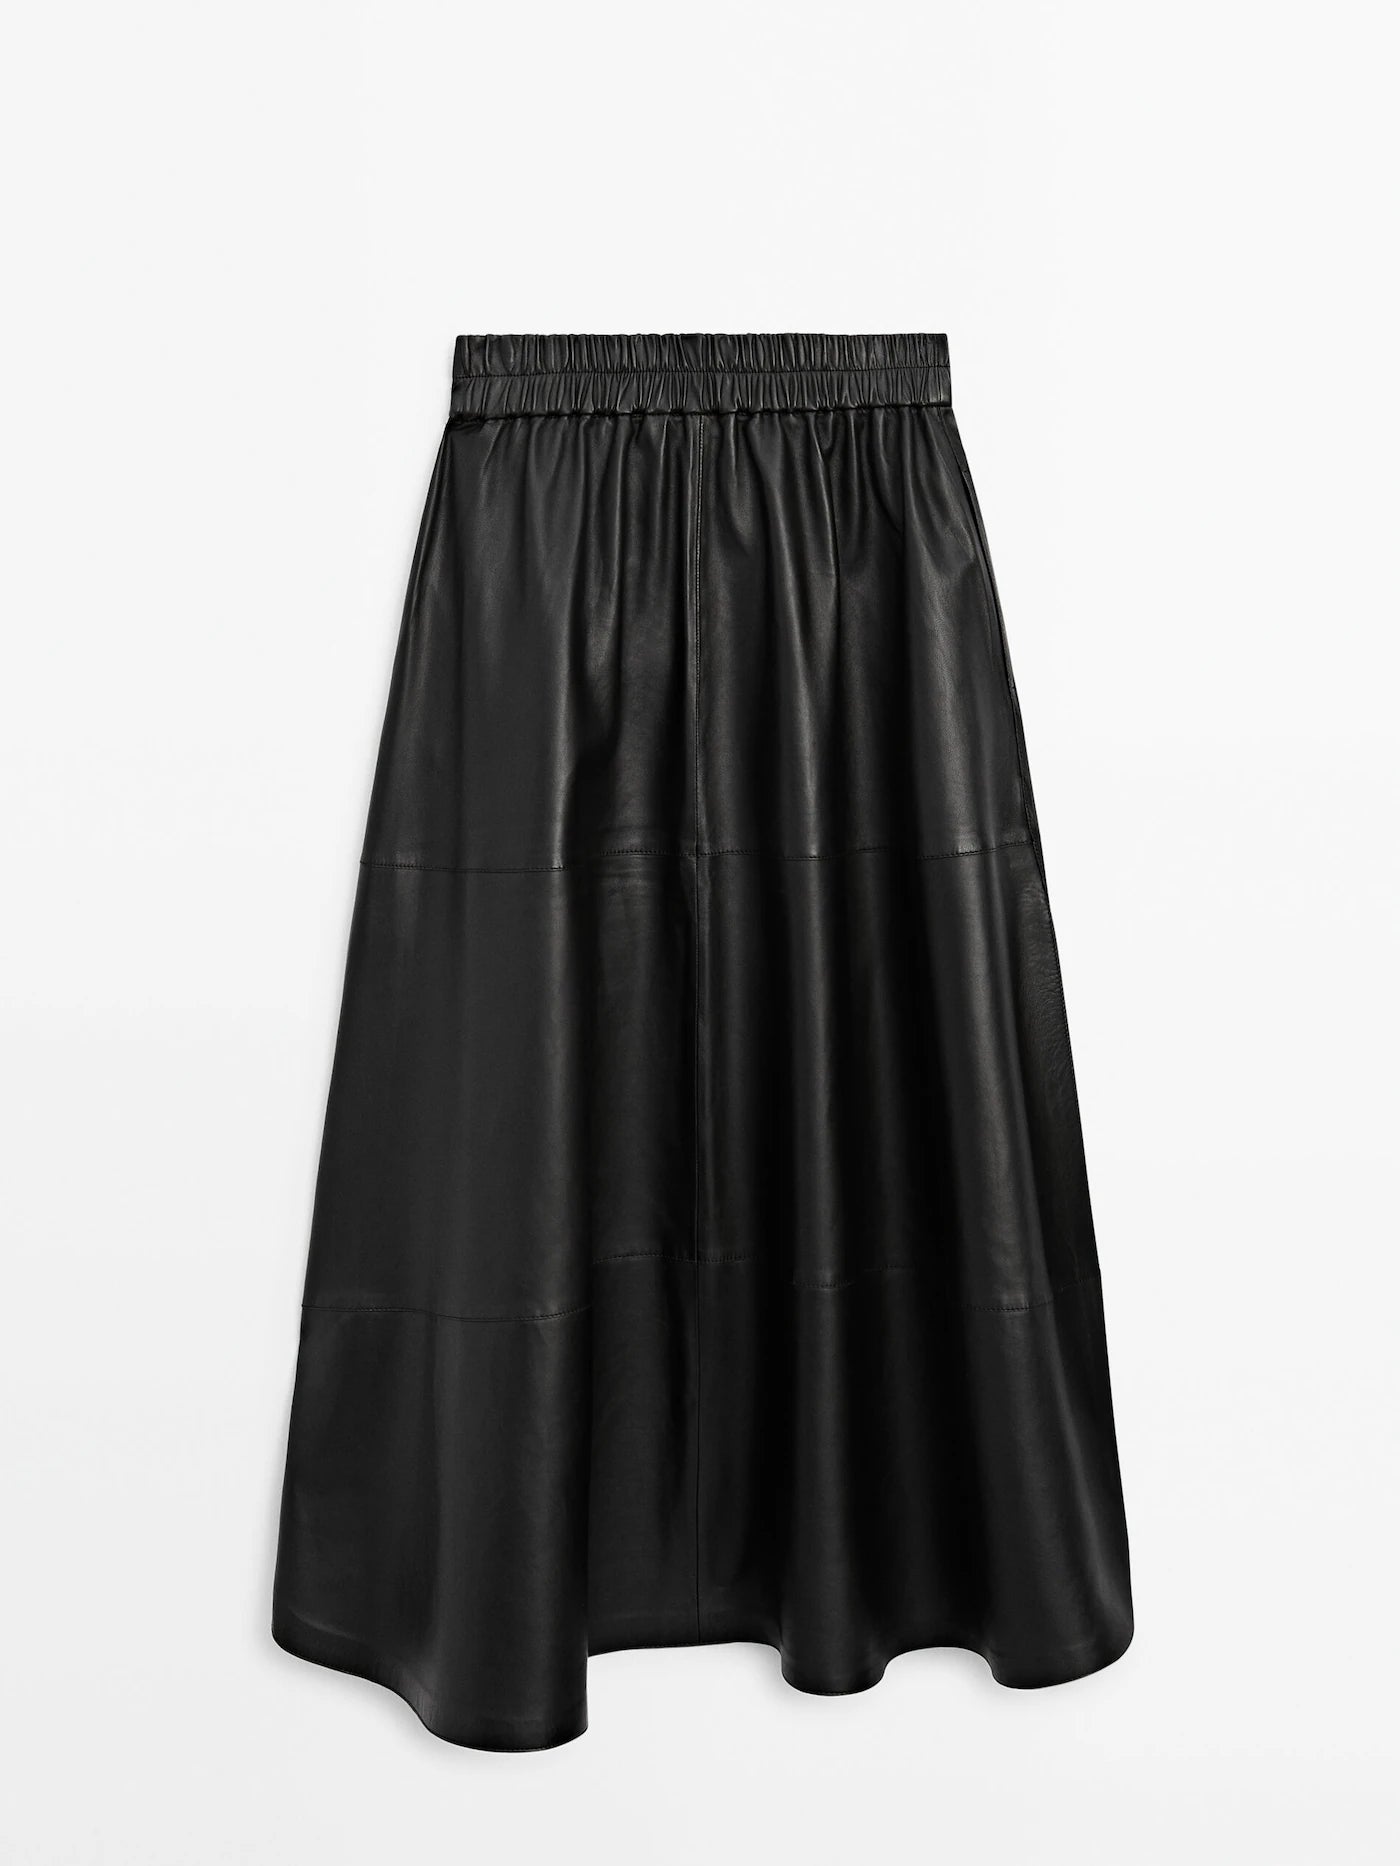 Long nappa leather skirt